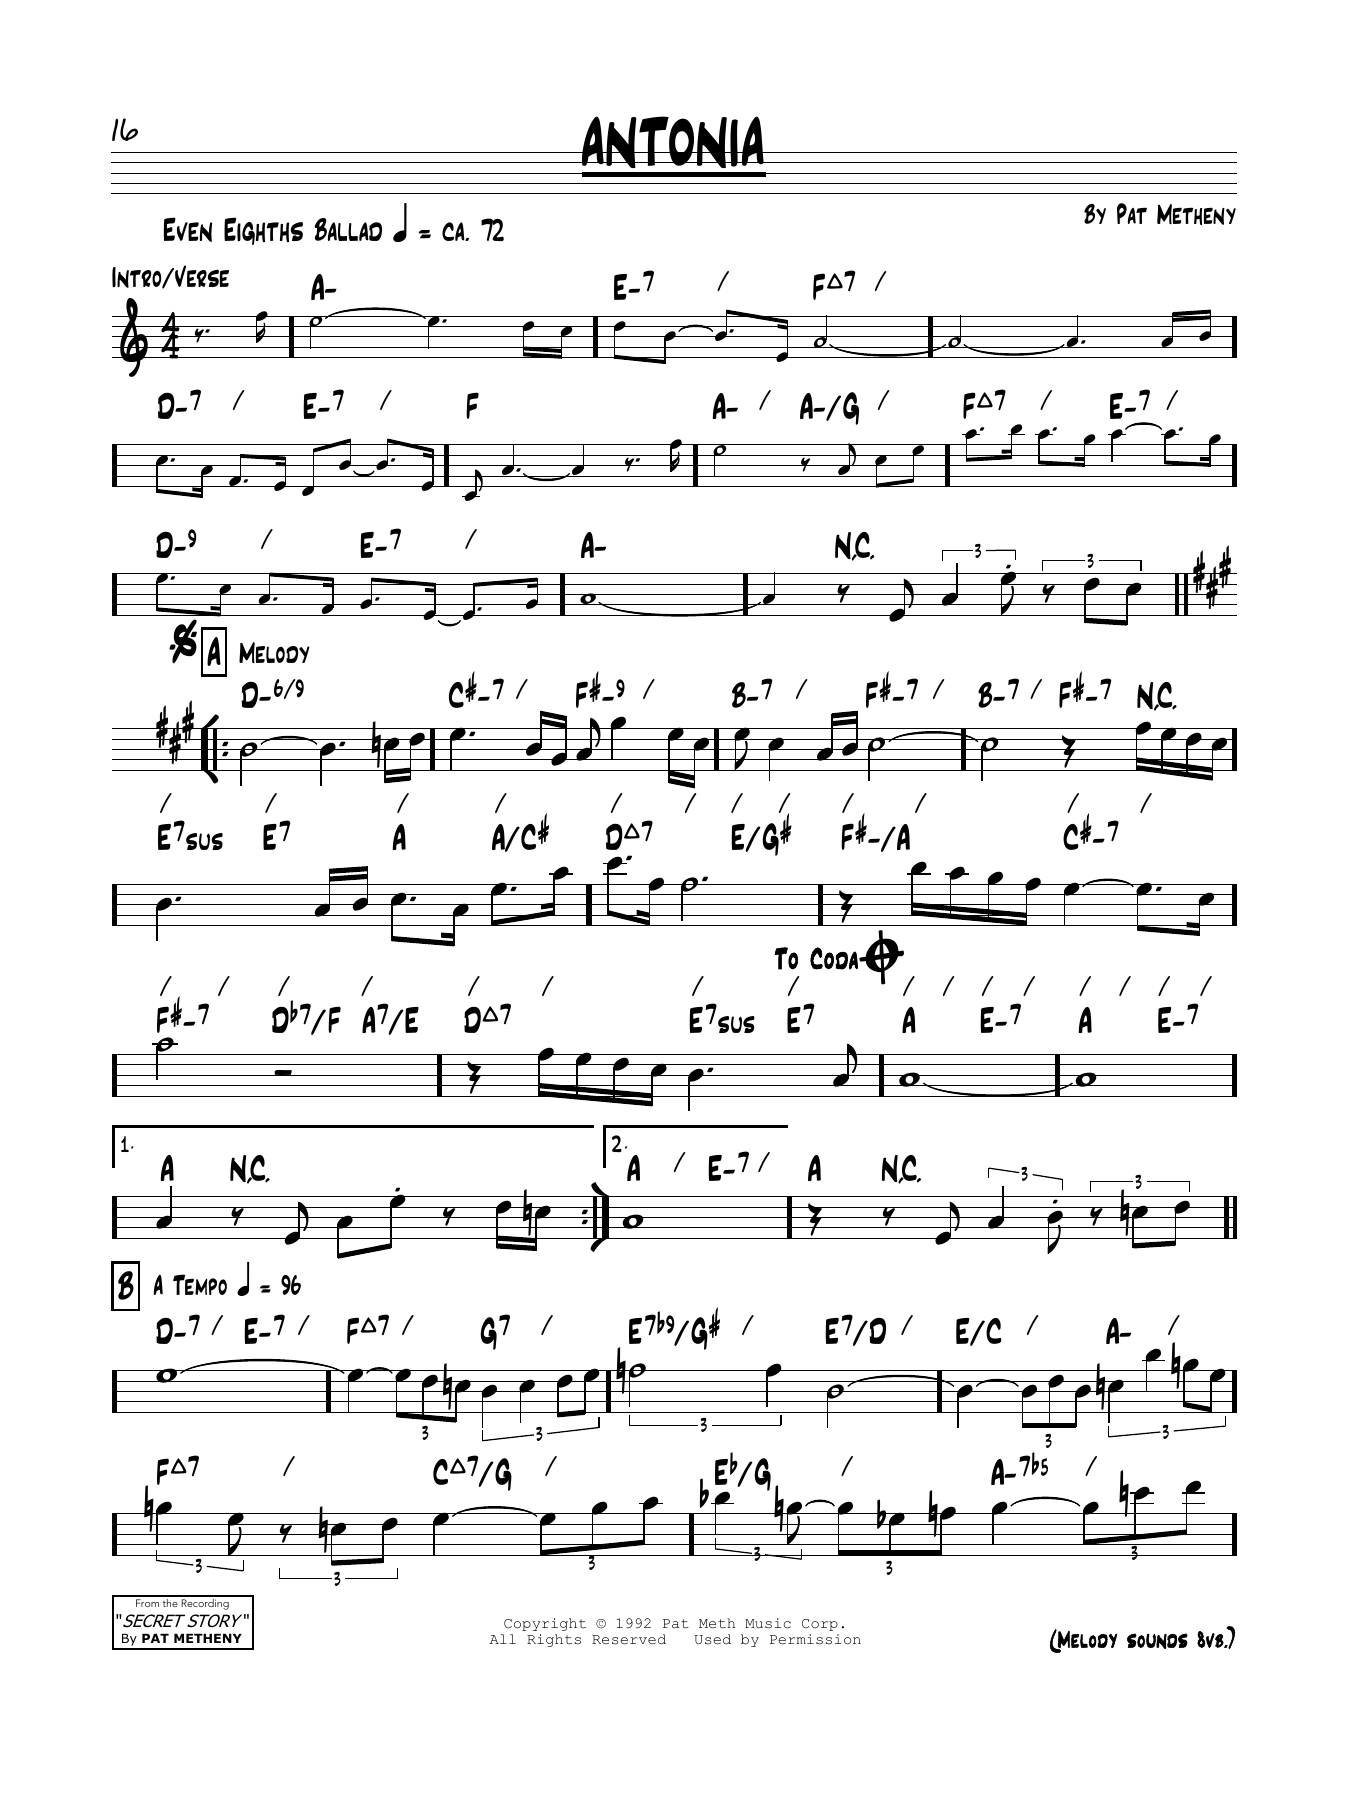 Pat Metheny Antonia Sheet Music Notes & Chords for Real Book – Melody & Chords - Download or Print PDF